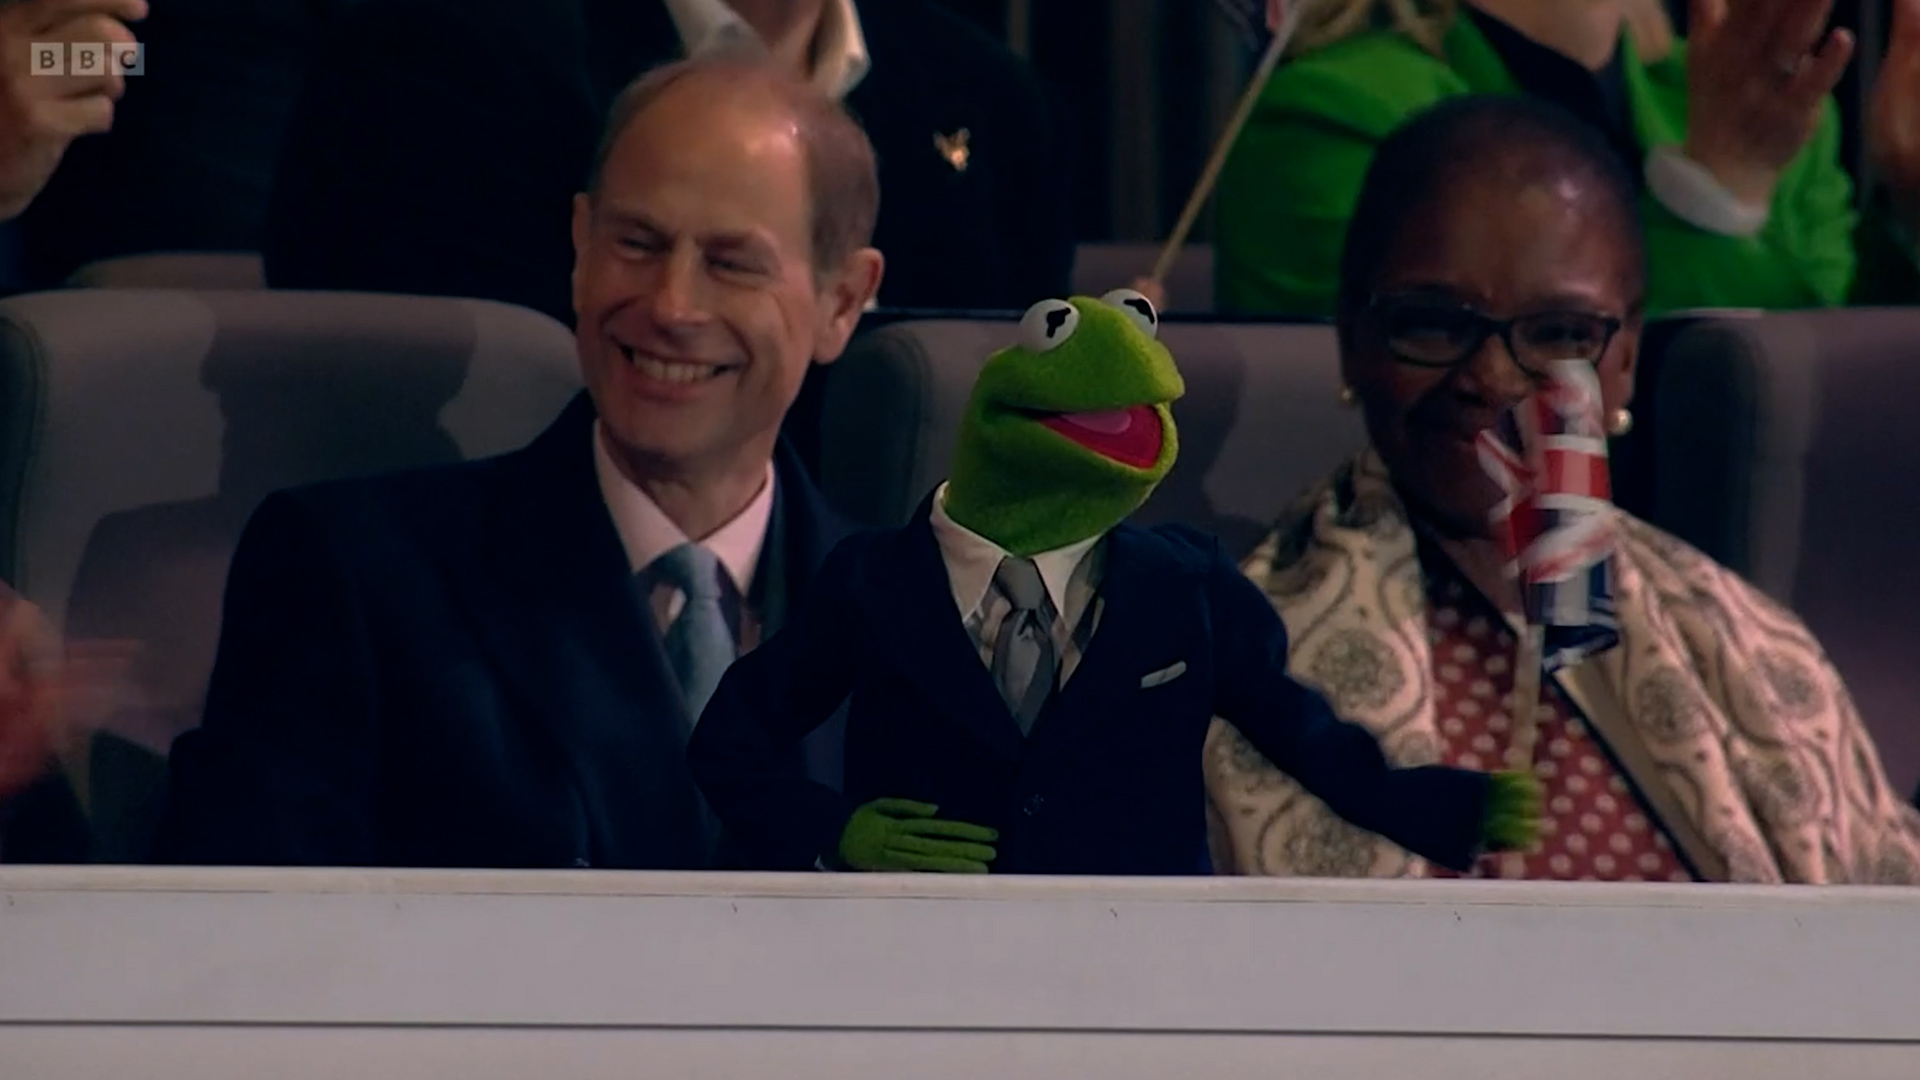 The Duke of Edinburgh laughs at Kermit the frog enters the royal box 